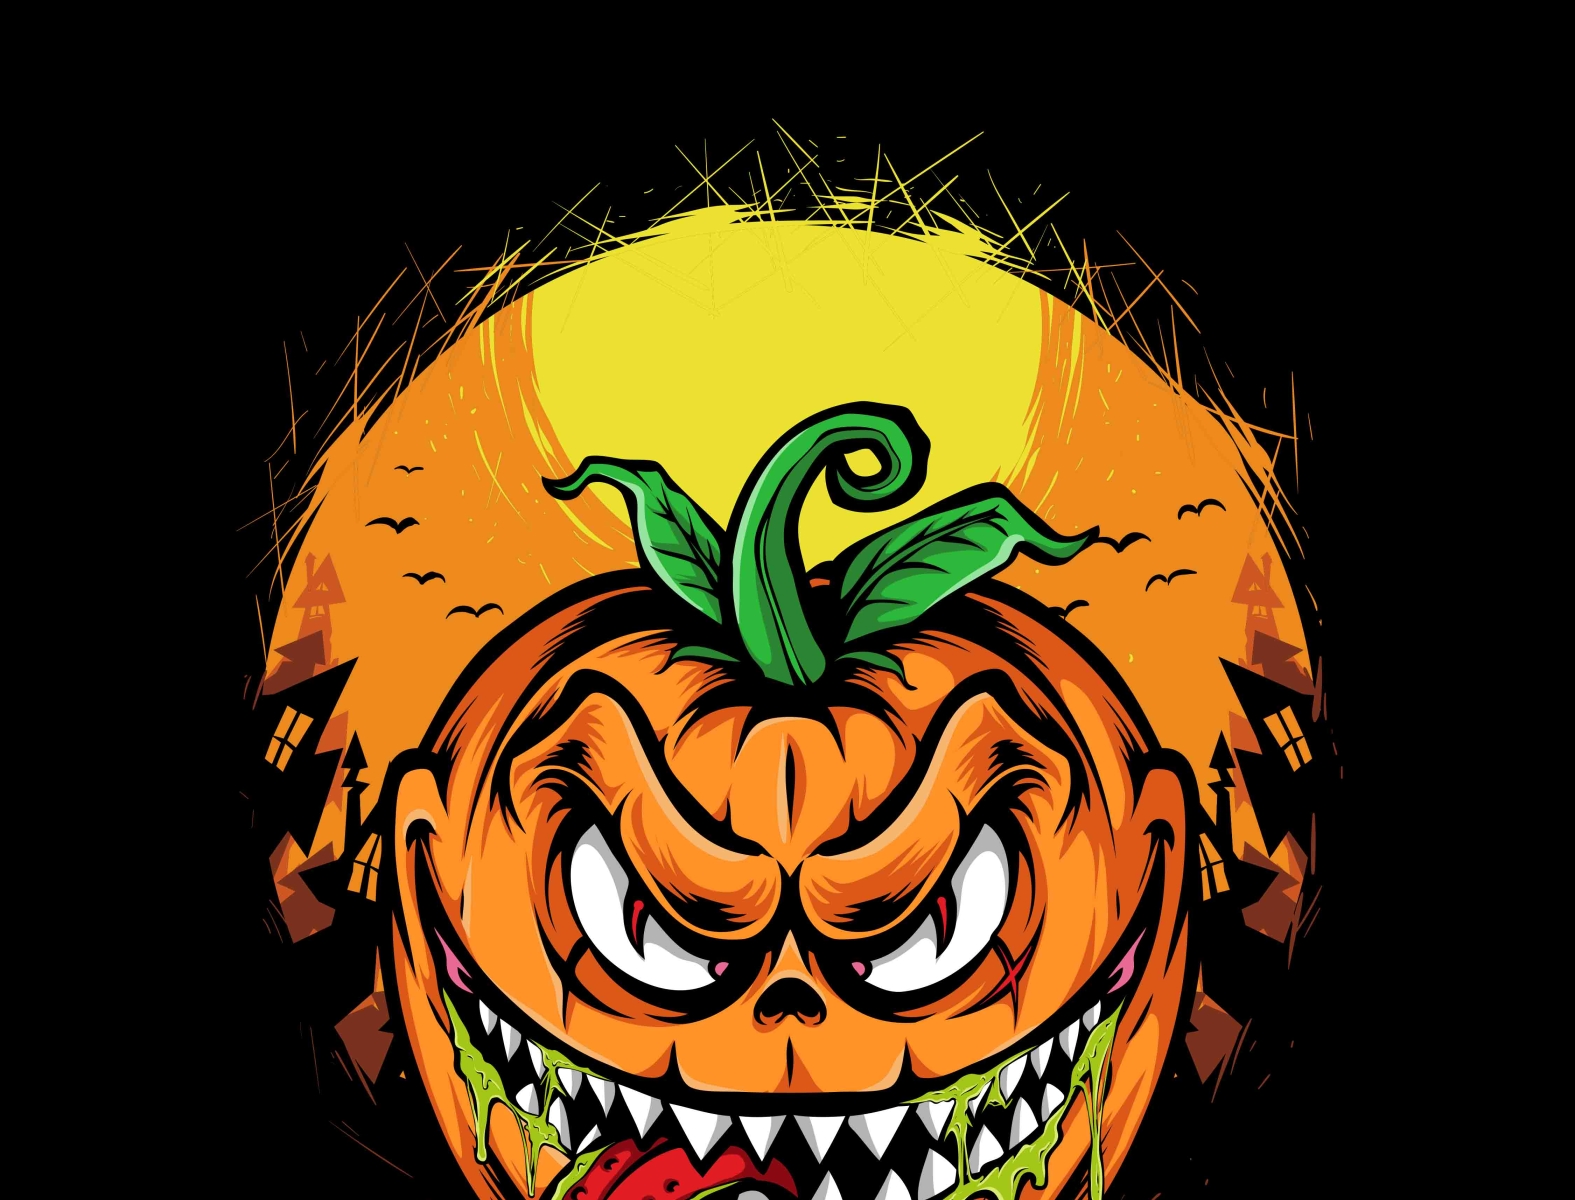 monster pumpkin hallowen art by ChrisHarry⛲ on Dribbble